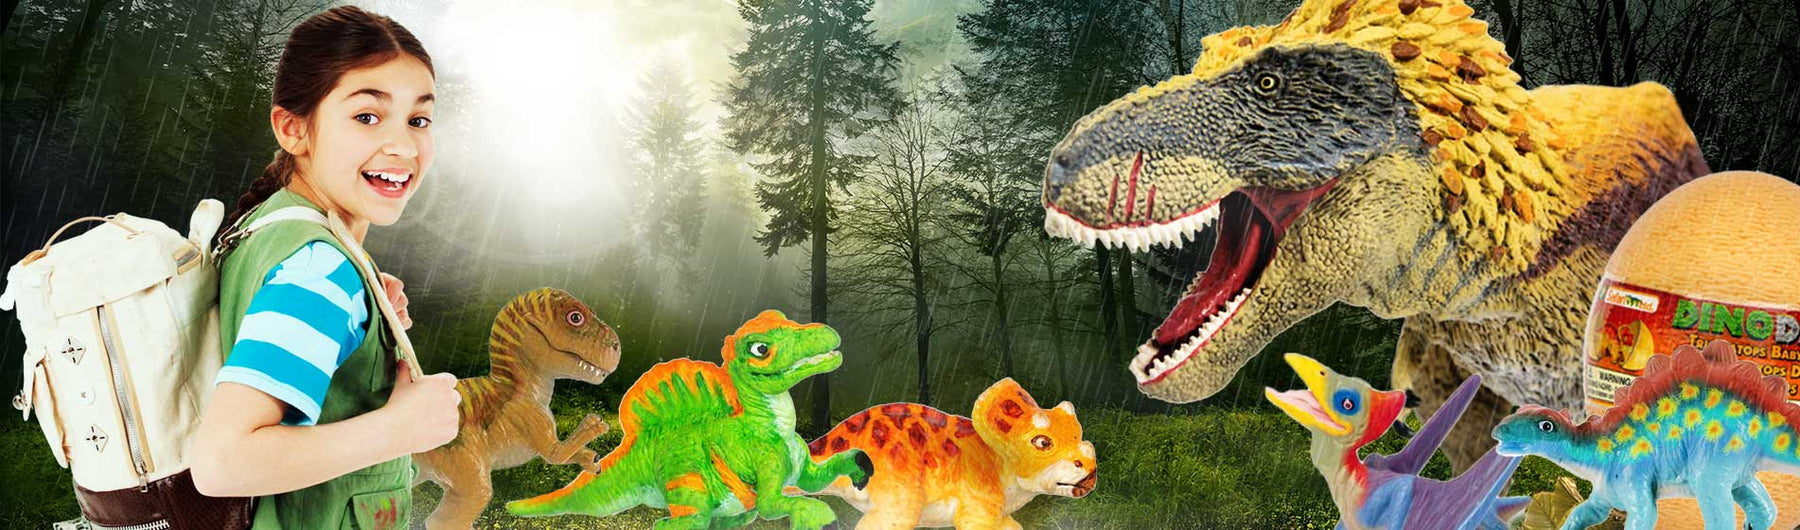 Get to Know the New Dino Dana Dinosaur Toys - Safari Ltd®